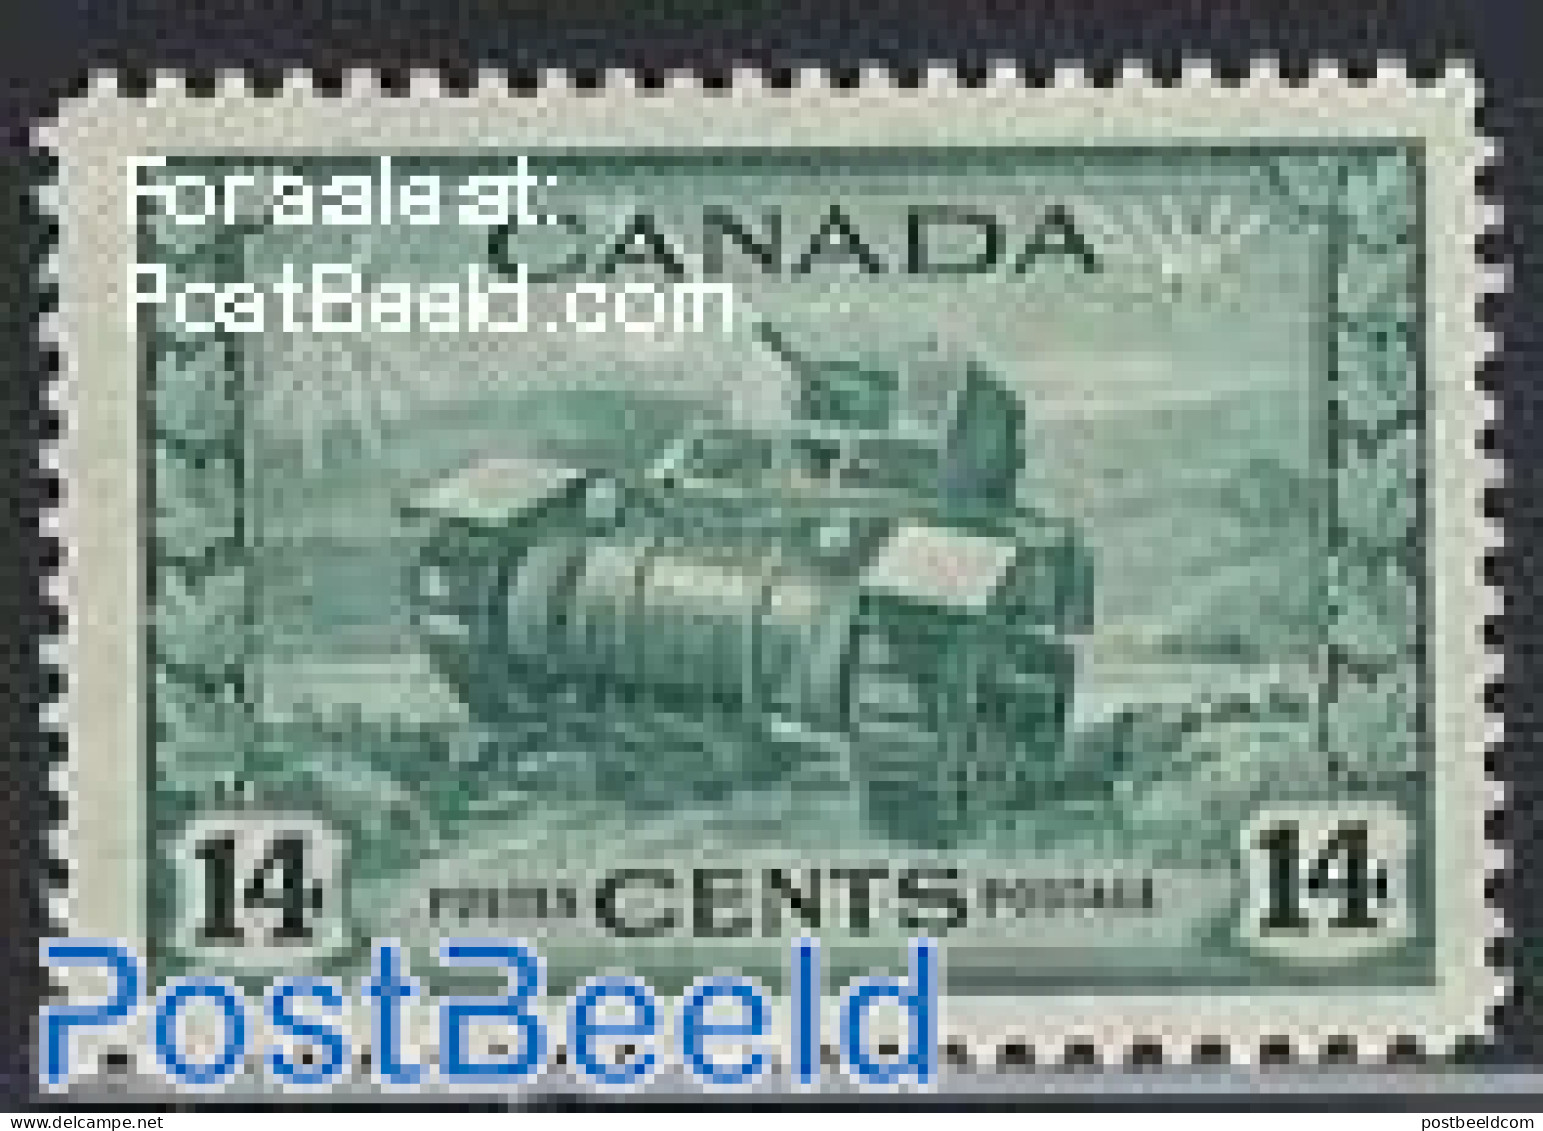 Canada 1942 14c, Stamp Out Of Set, Unused (hinged) - Unused Stamps